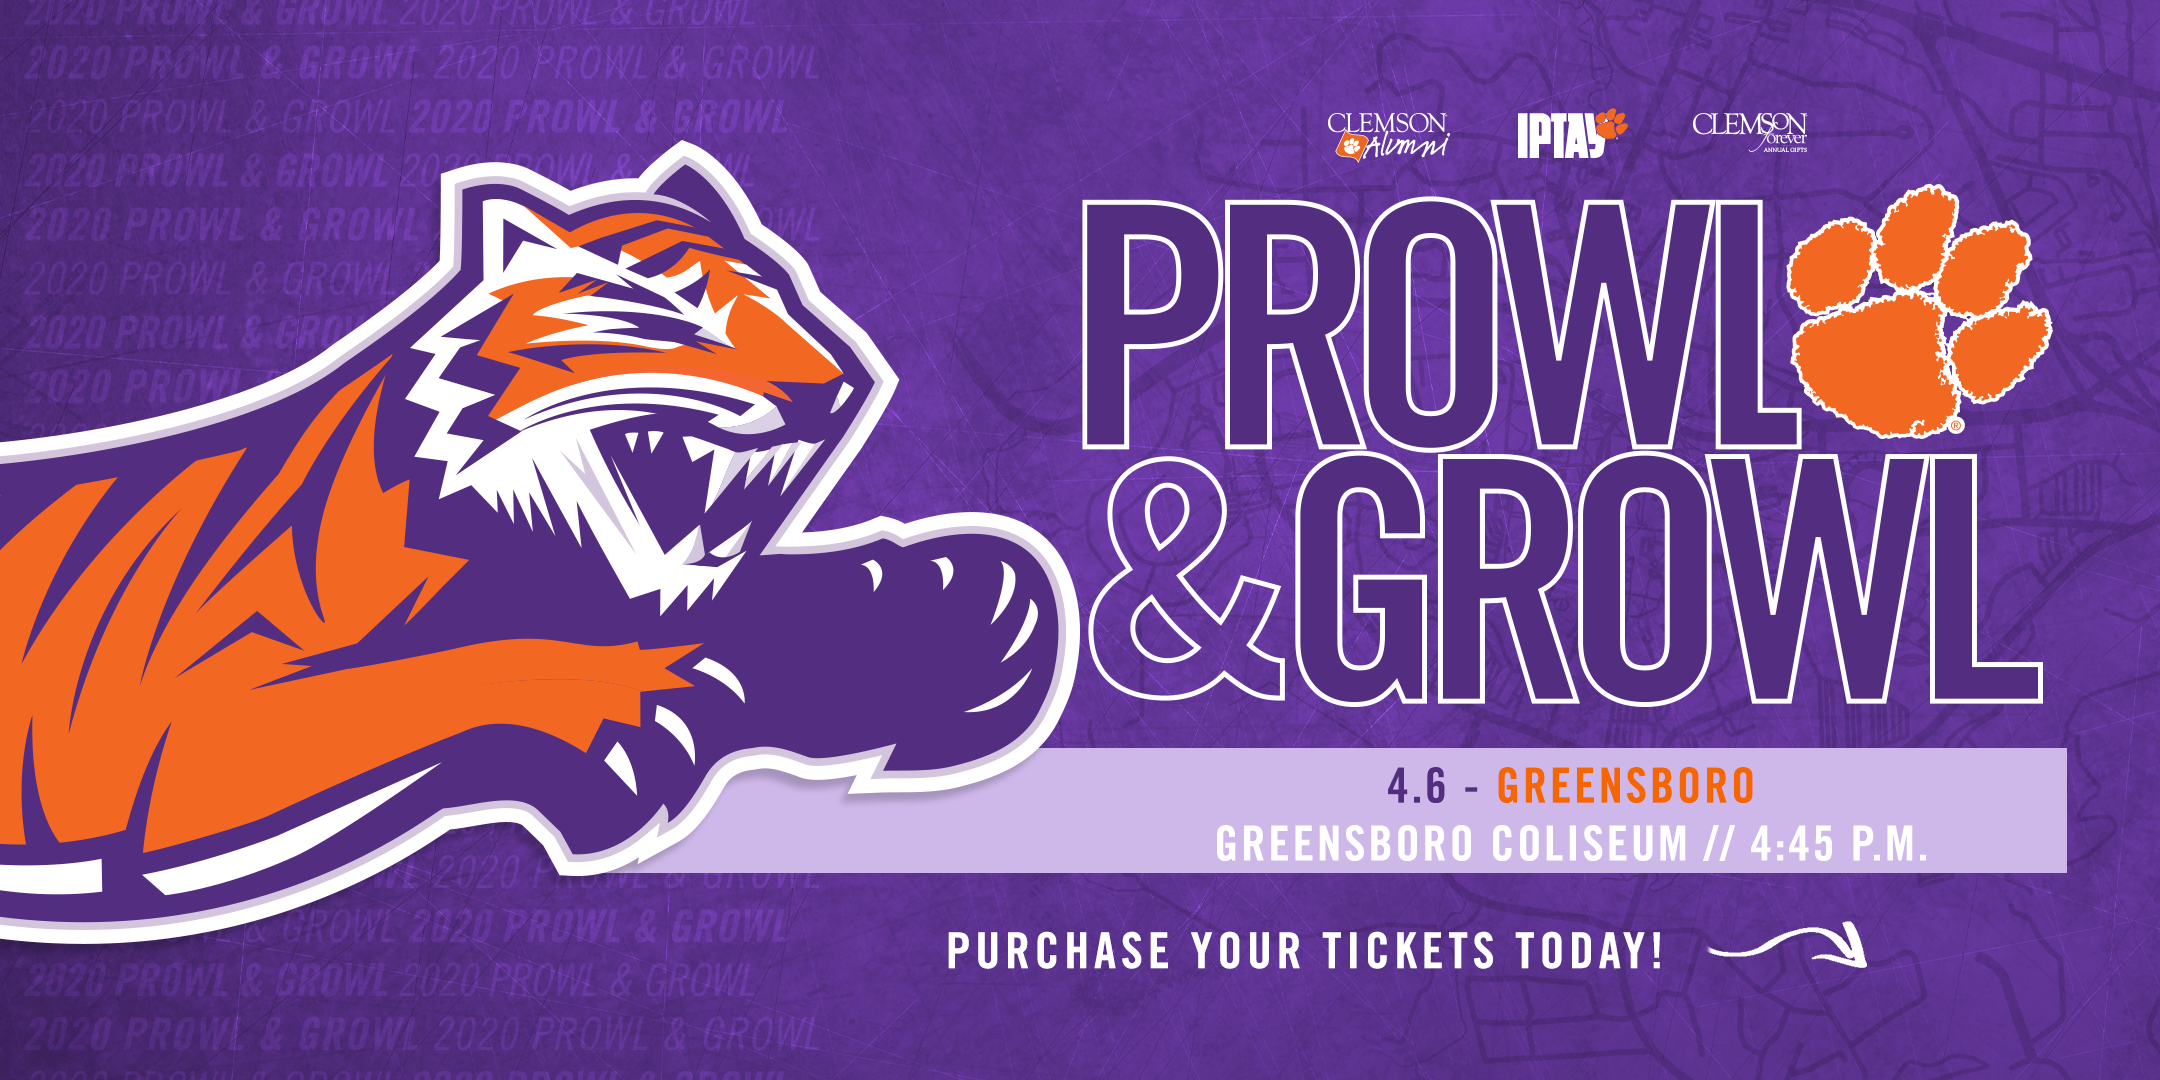 Clemson Club - Prowl & Growl 2020 - Greensboro Coliseum